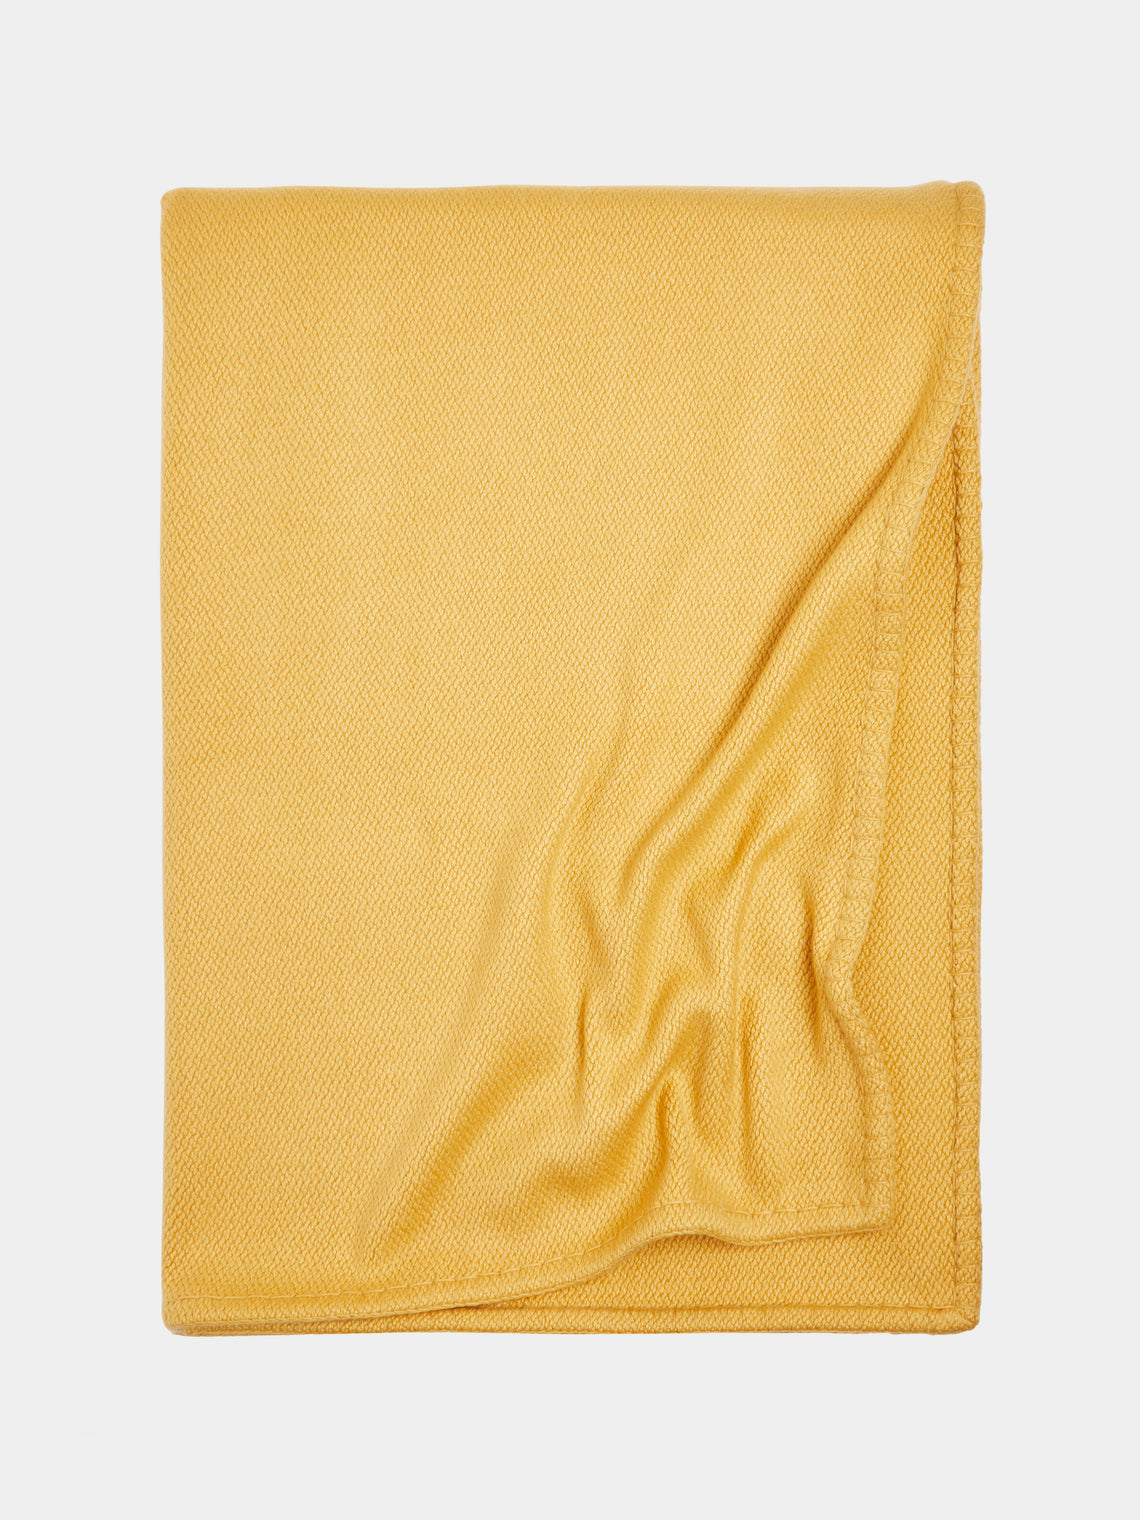 Rose Uniacke - Hand-Dyed Cashmere Large Blanket - Gold - ABASK - 